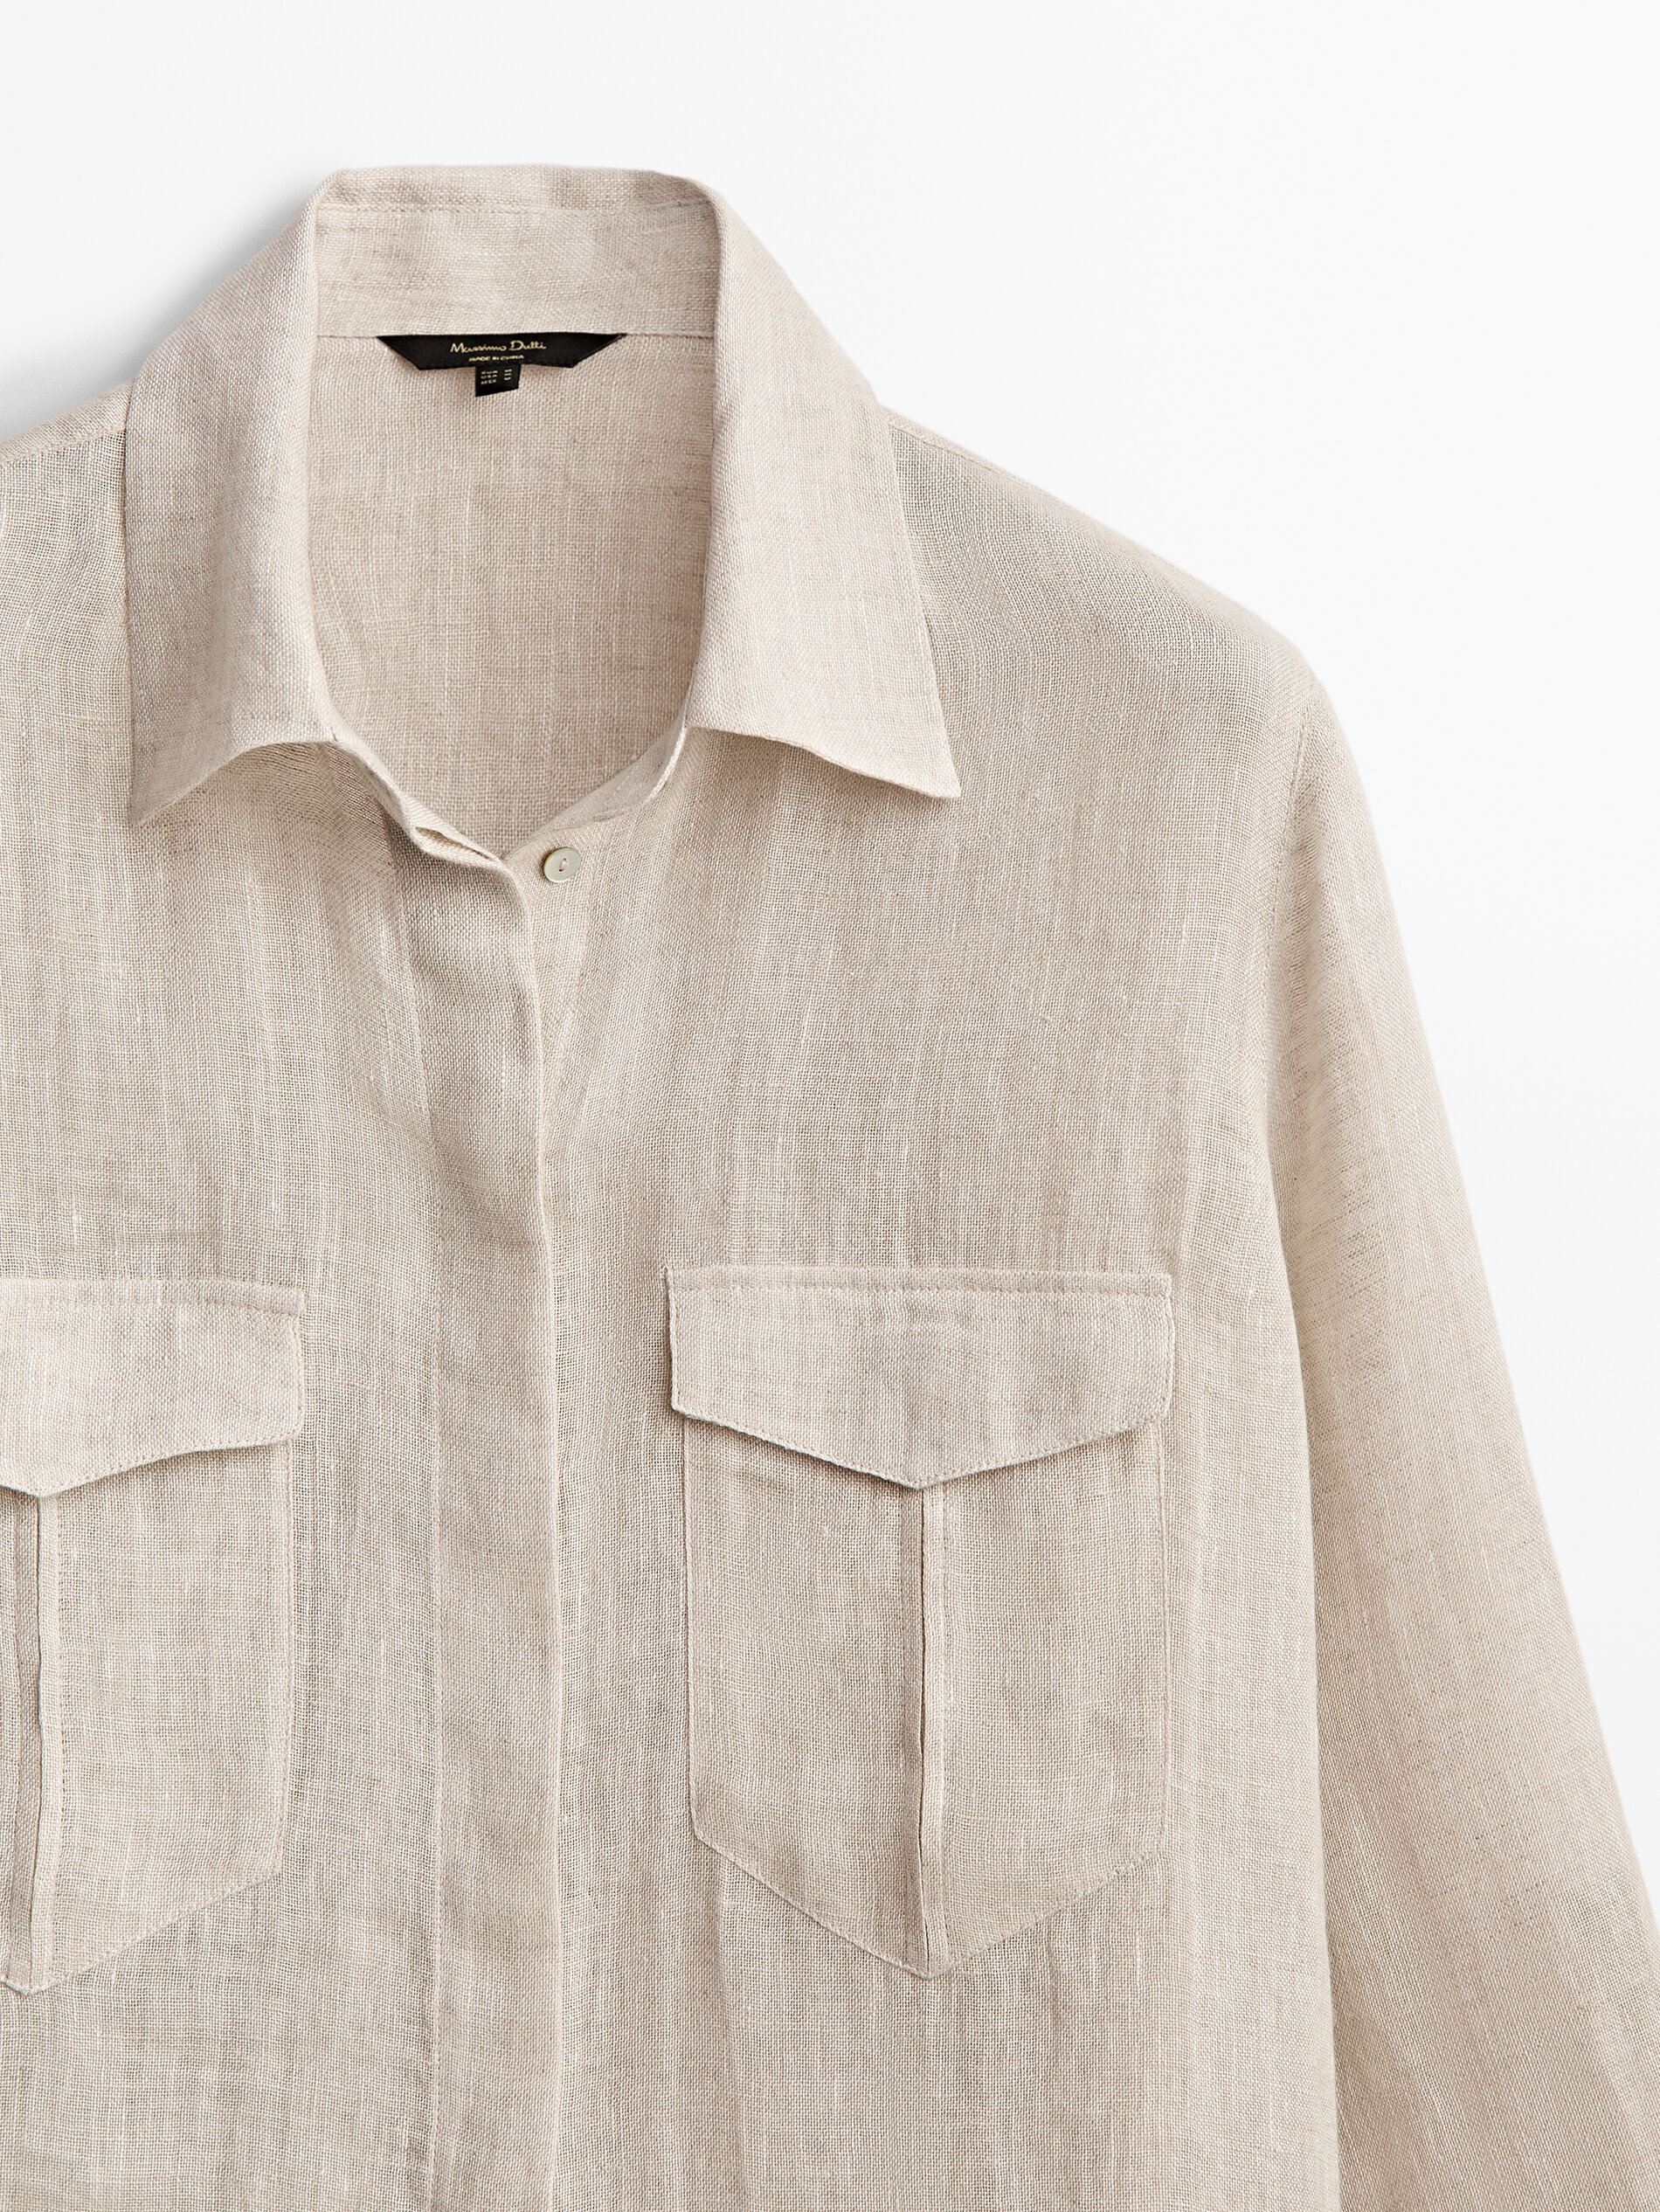 100% linen shirt with pockets - Massimo Dutti Finland